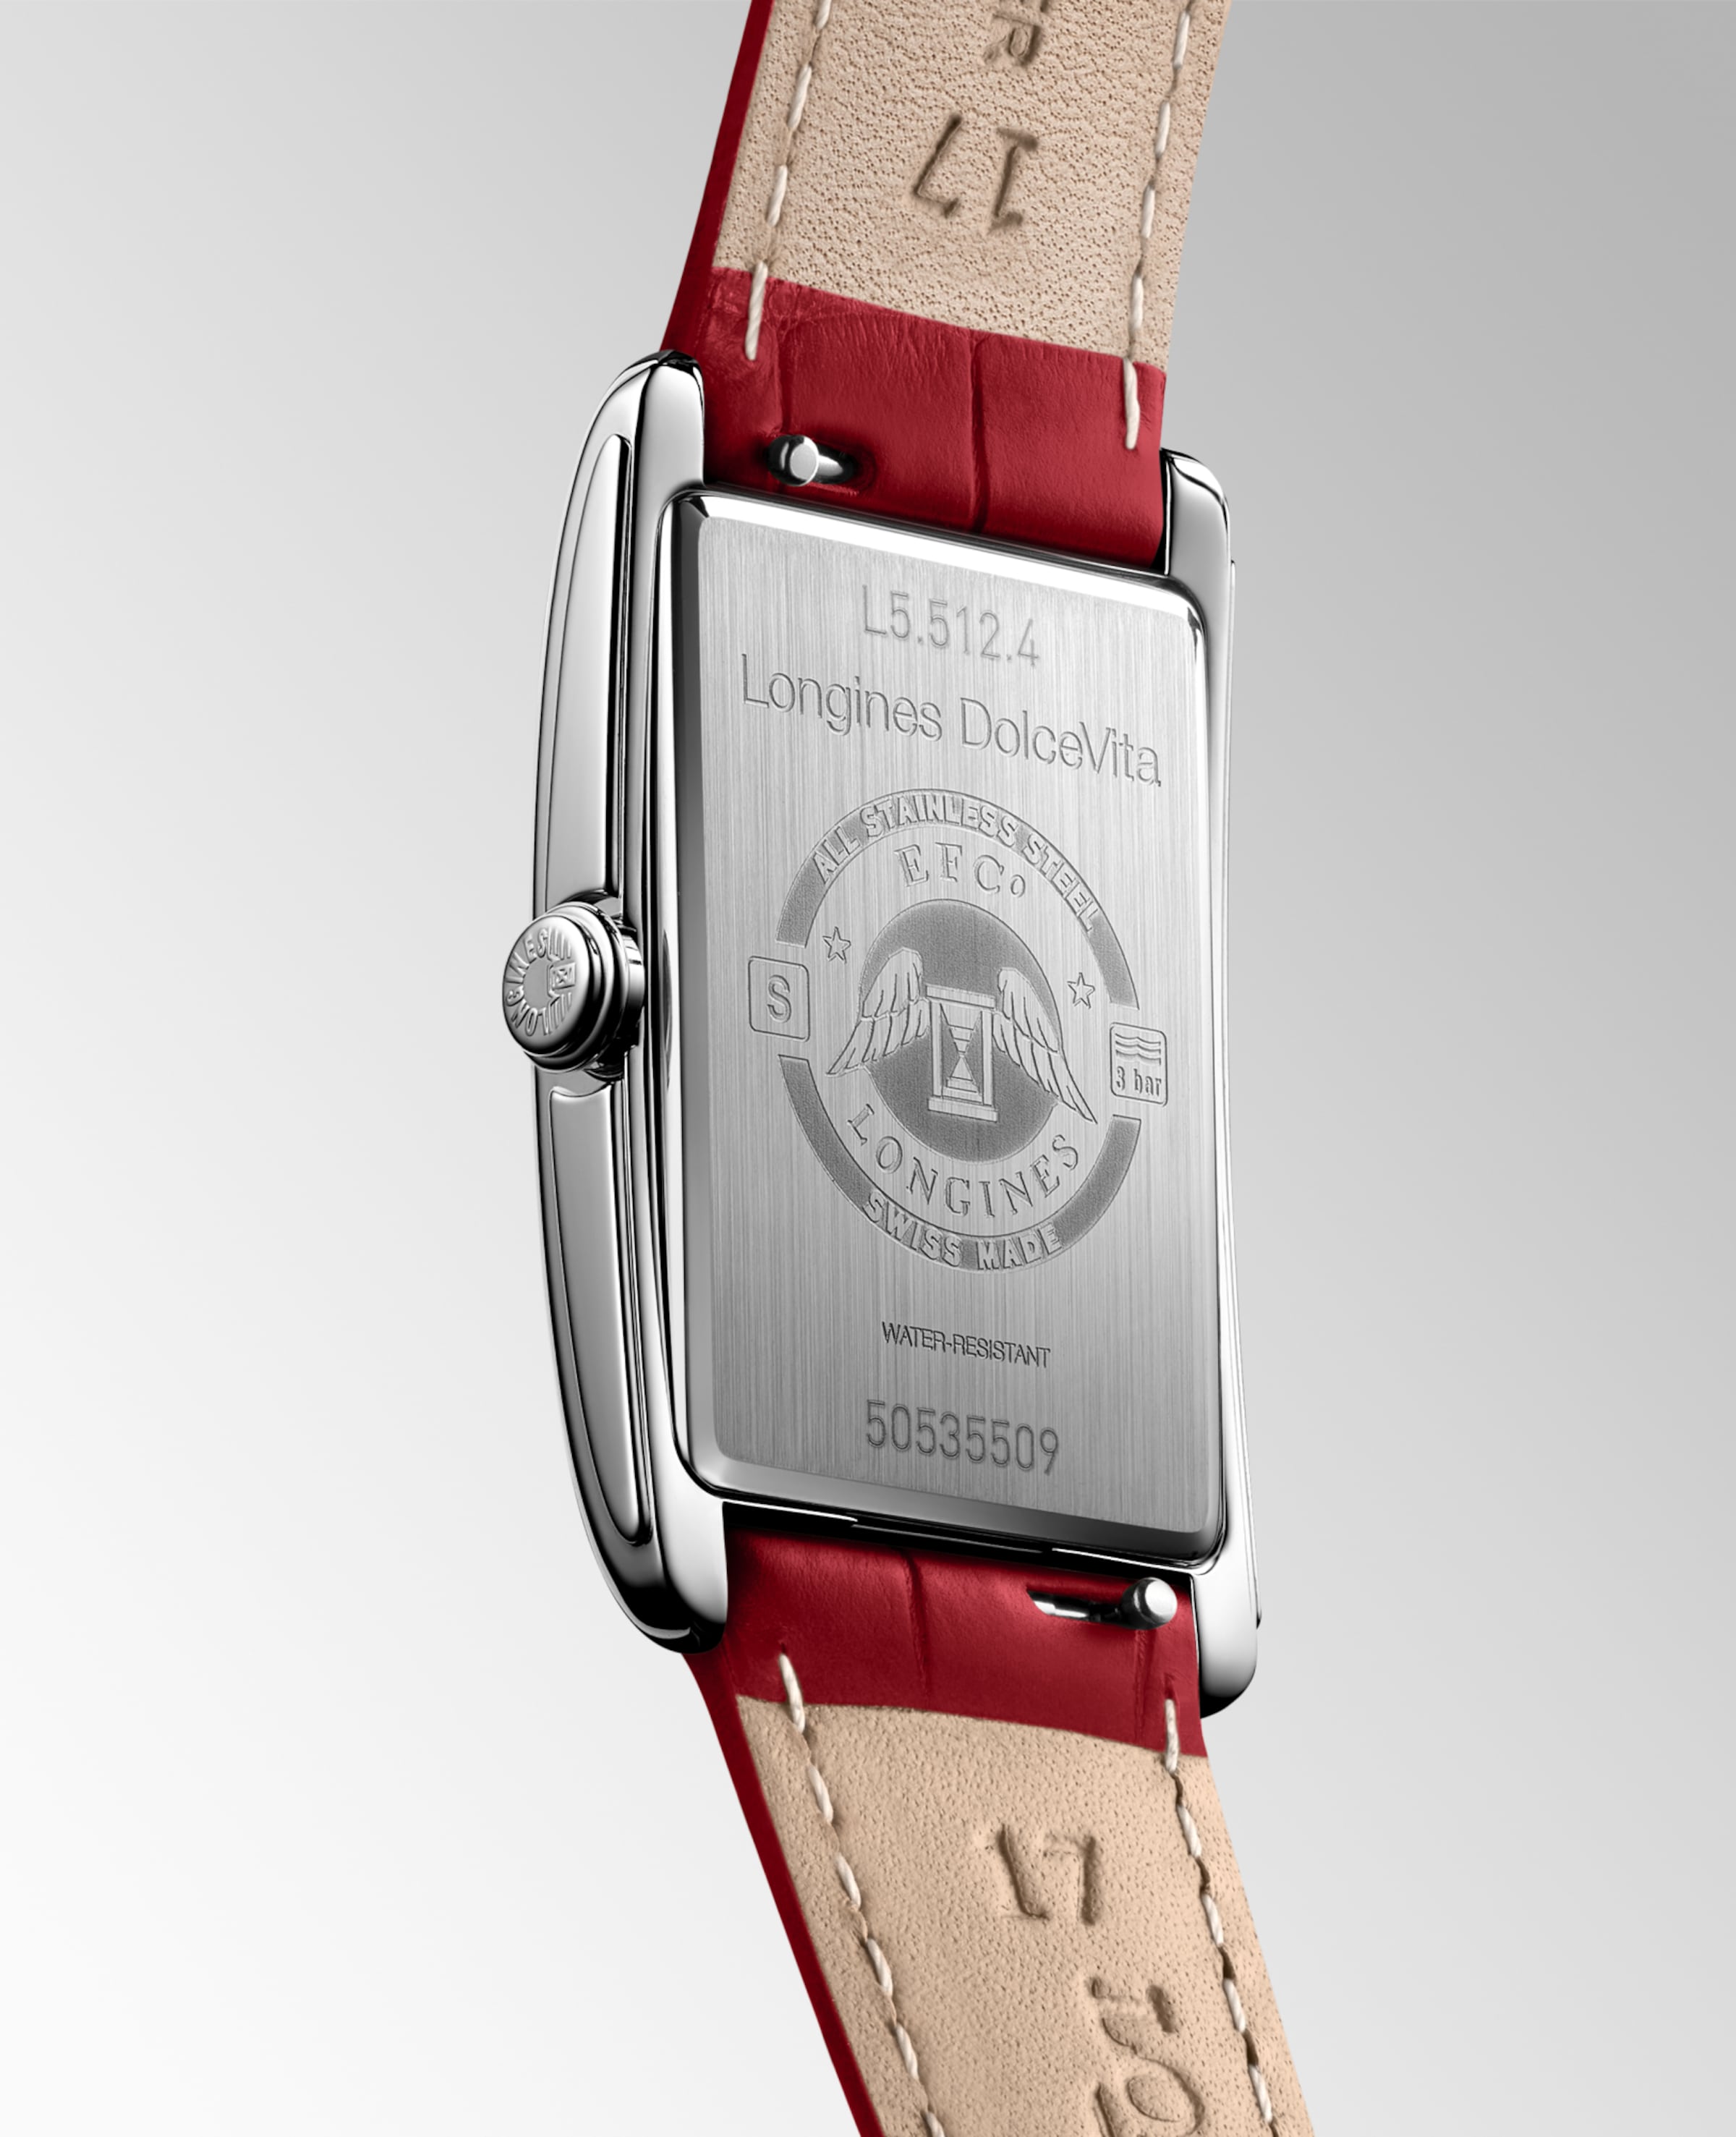 Longines DOLCEVITA Quartz Stainless steel Watch - L5.512.4.91.2